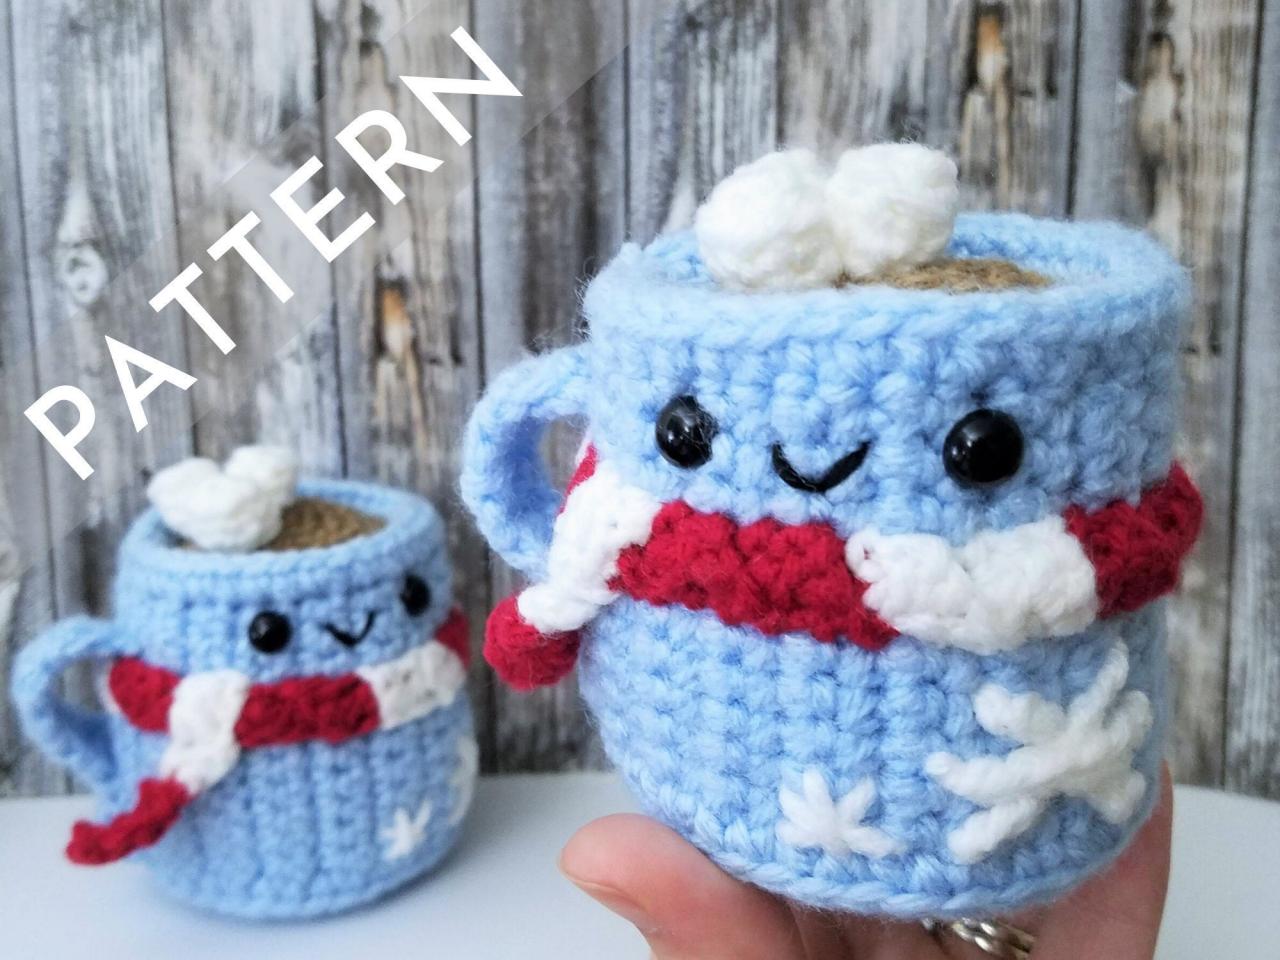 Little Choccy Amigurumi Crochet Pattern - Cup Of Chocolate Christmas Tree Ornament - Cute Holiday Gift Idea - Christmas In July Mug